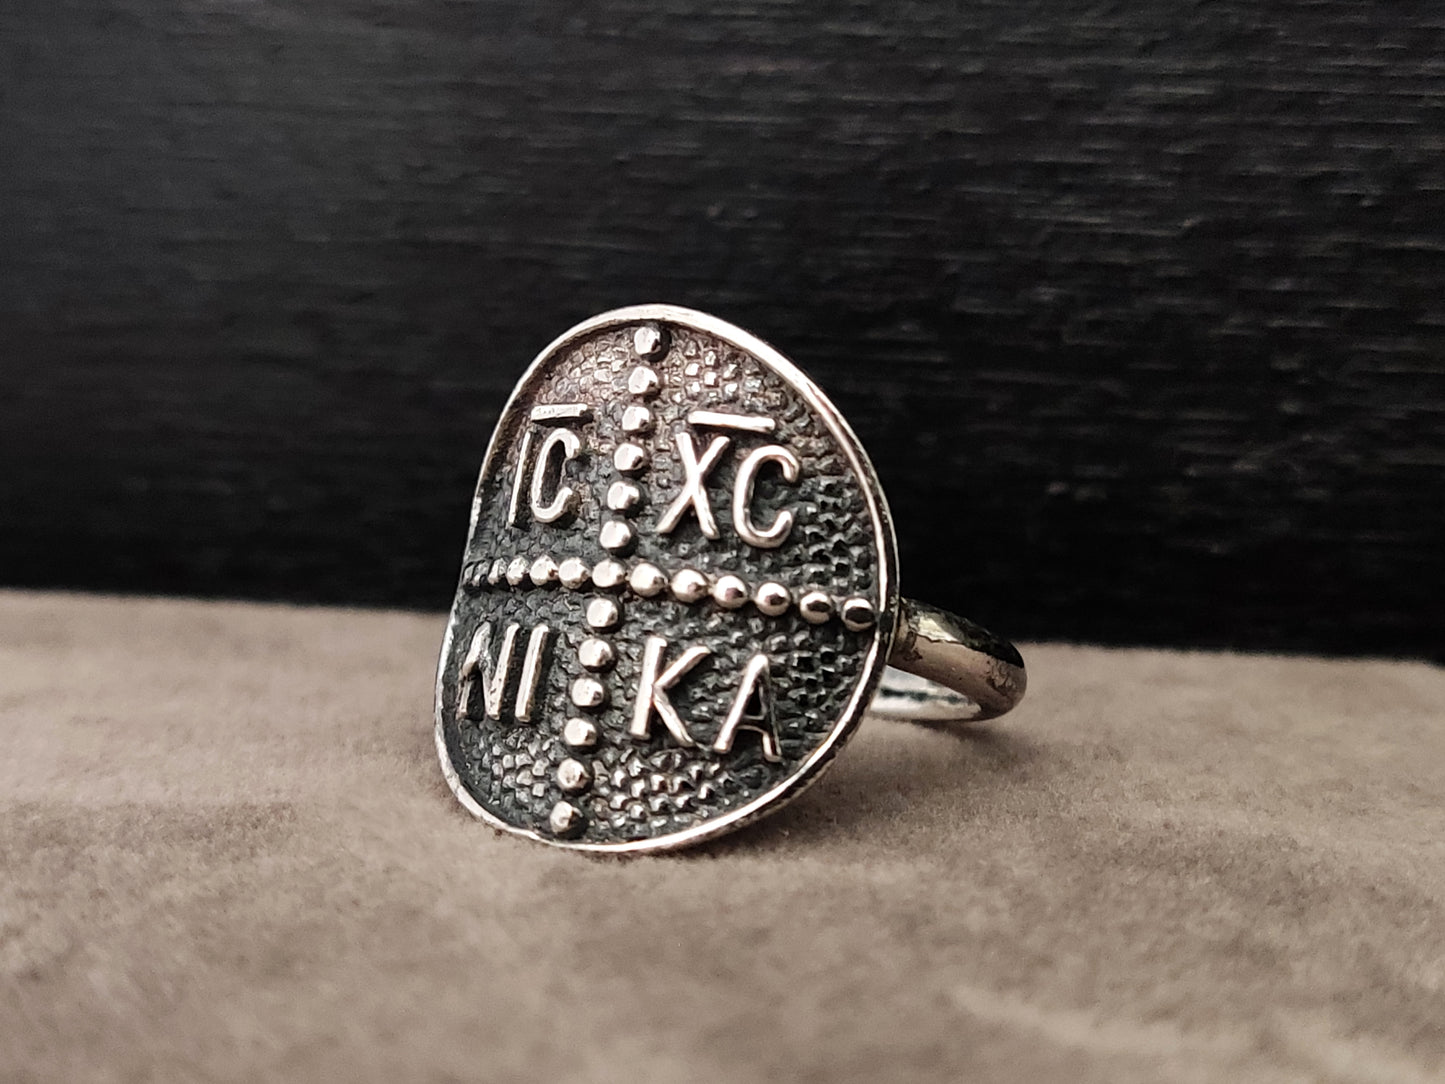 Greek Byzantine ICXC NIKA Cross Silver Ring 19mm